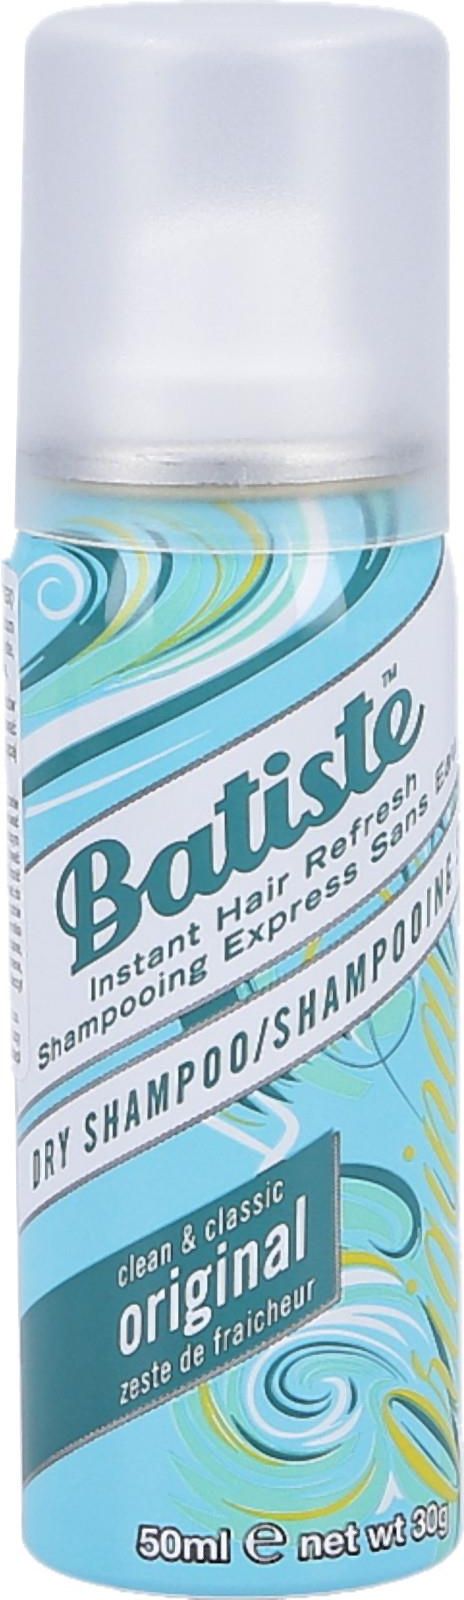 batiste szampon ceneo suchy